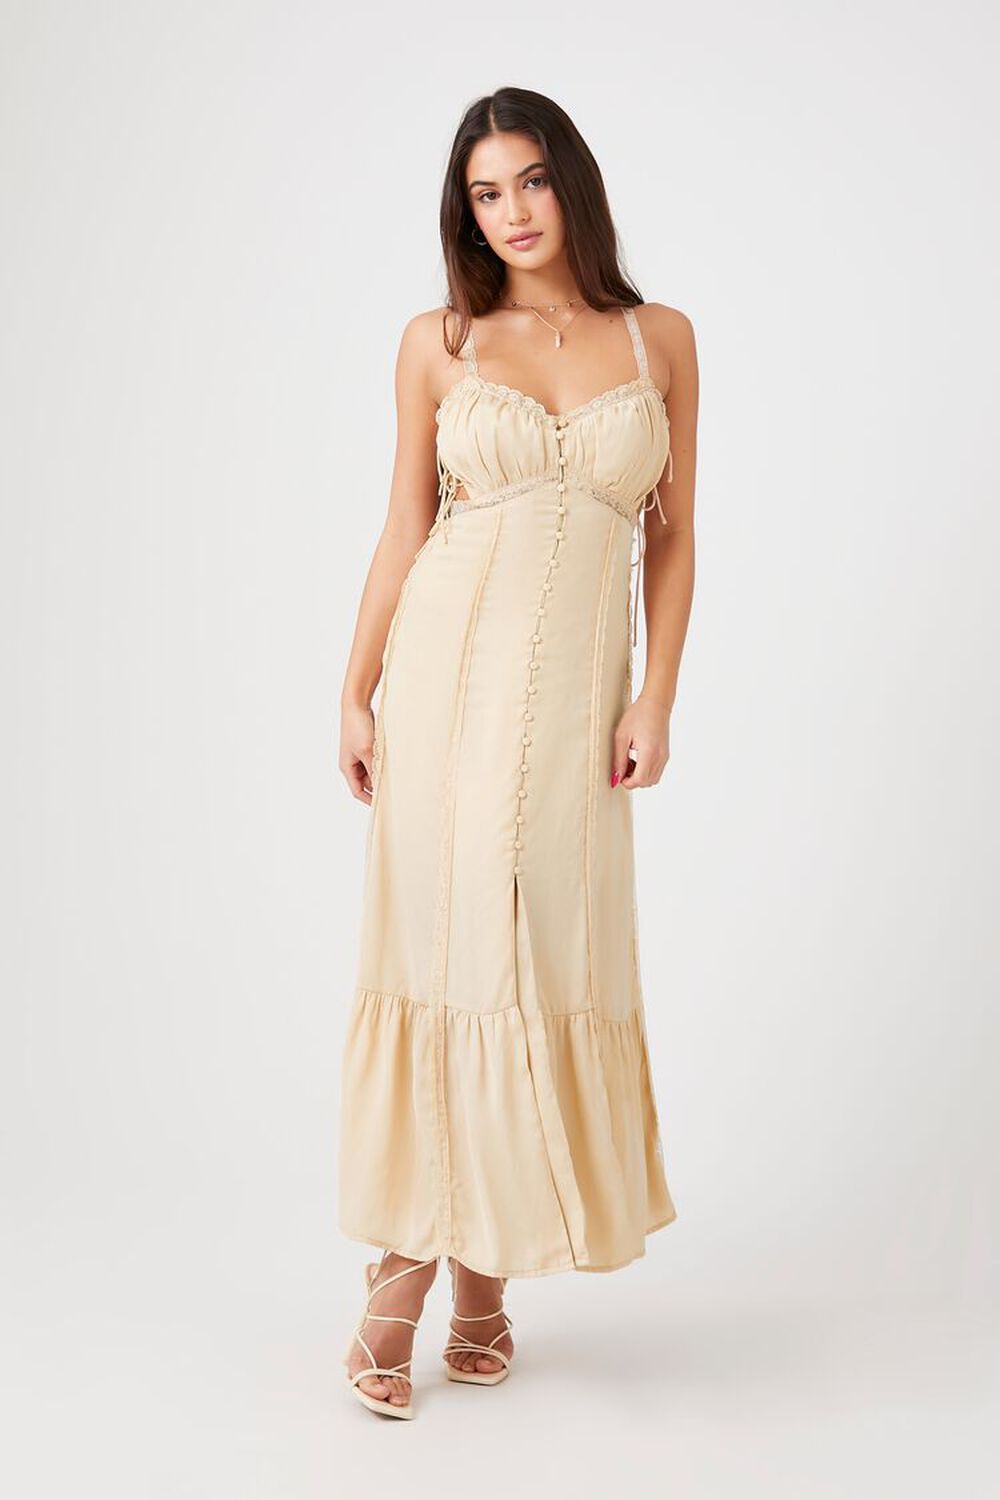 Satin Lace-Trim Cutout Midi Dress, image 1